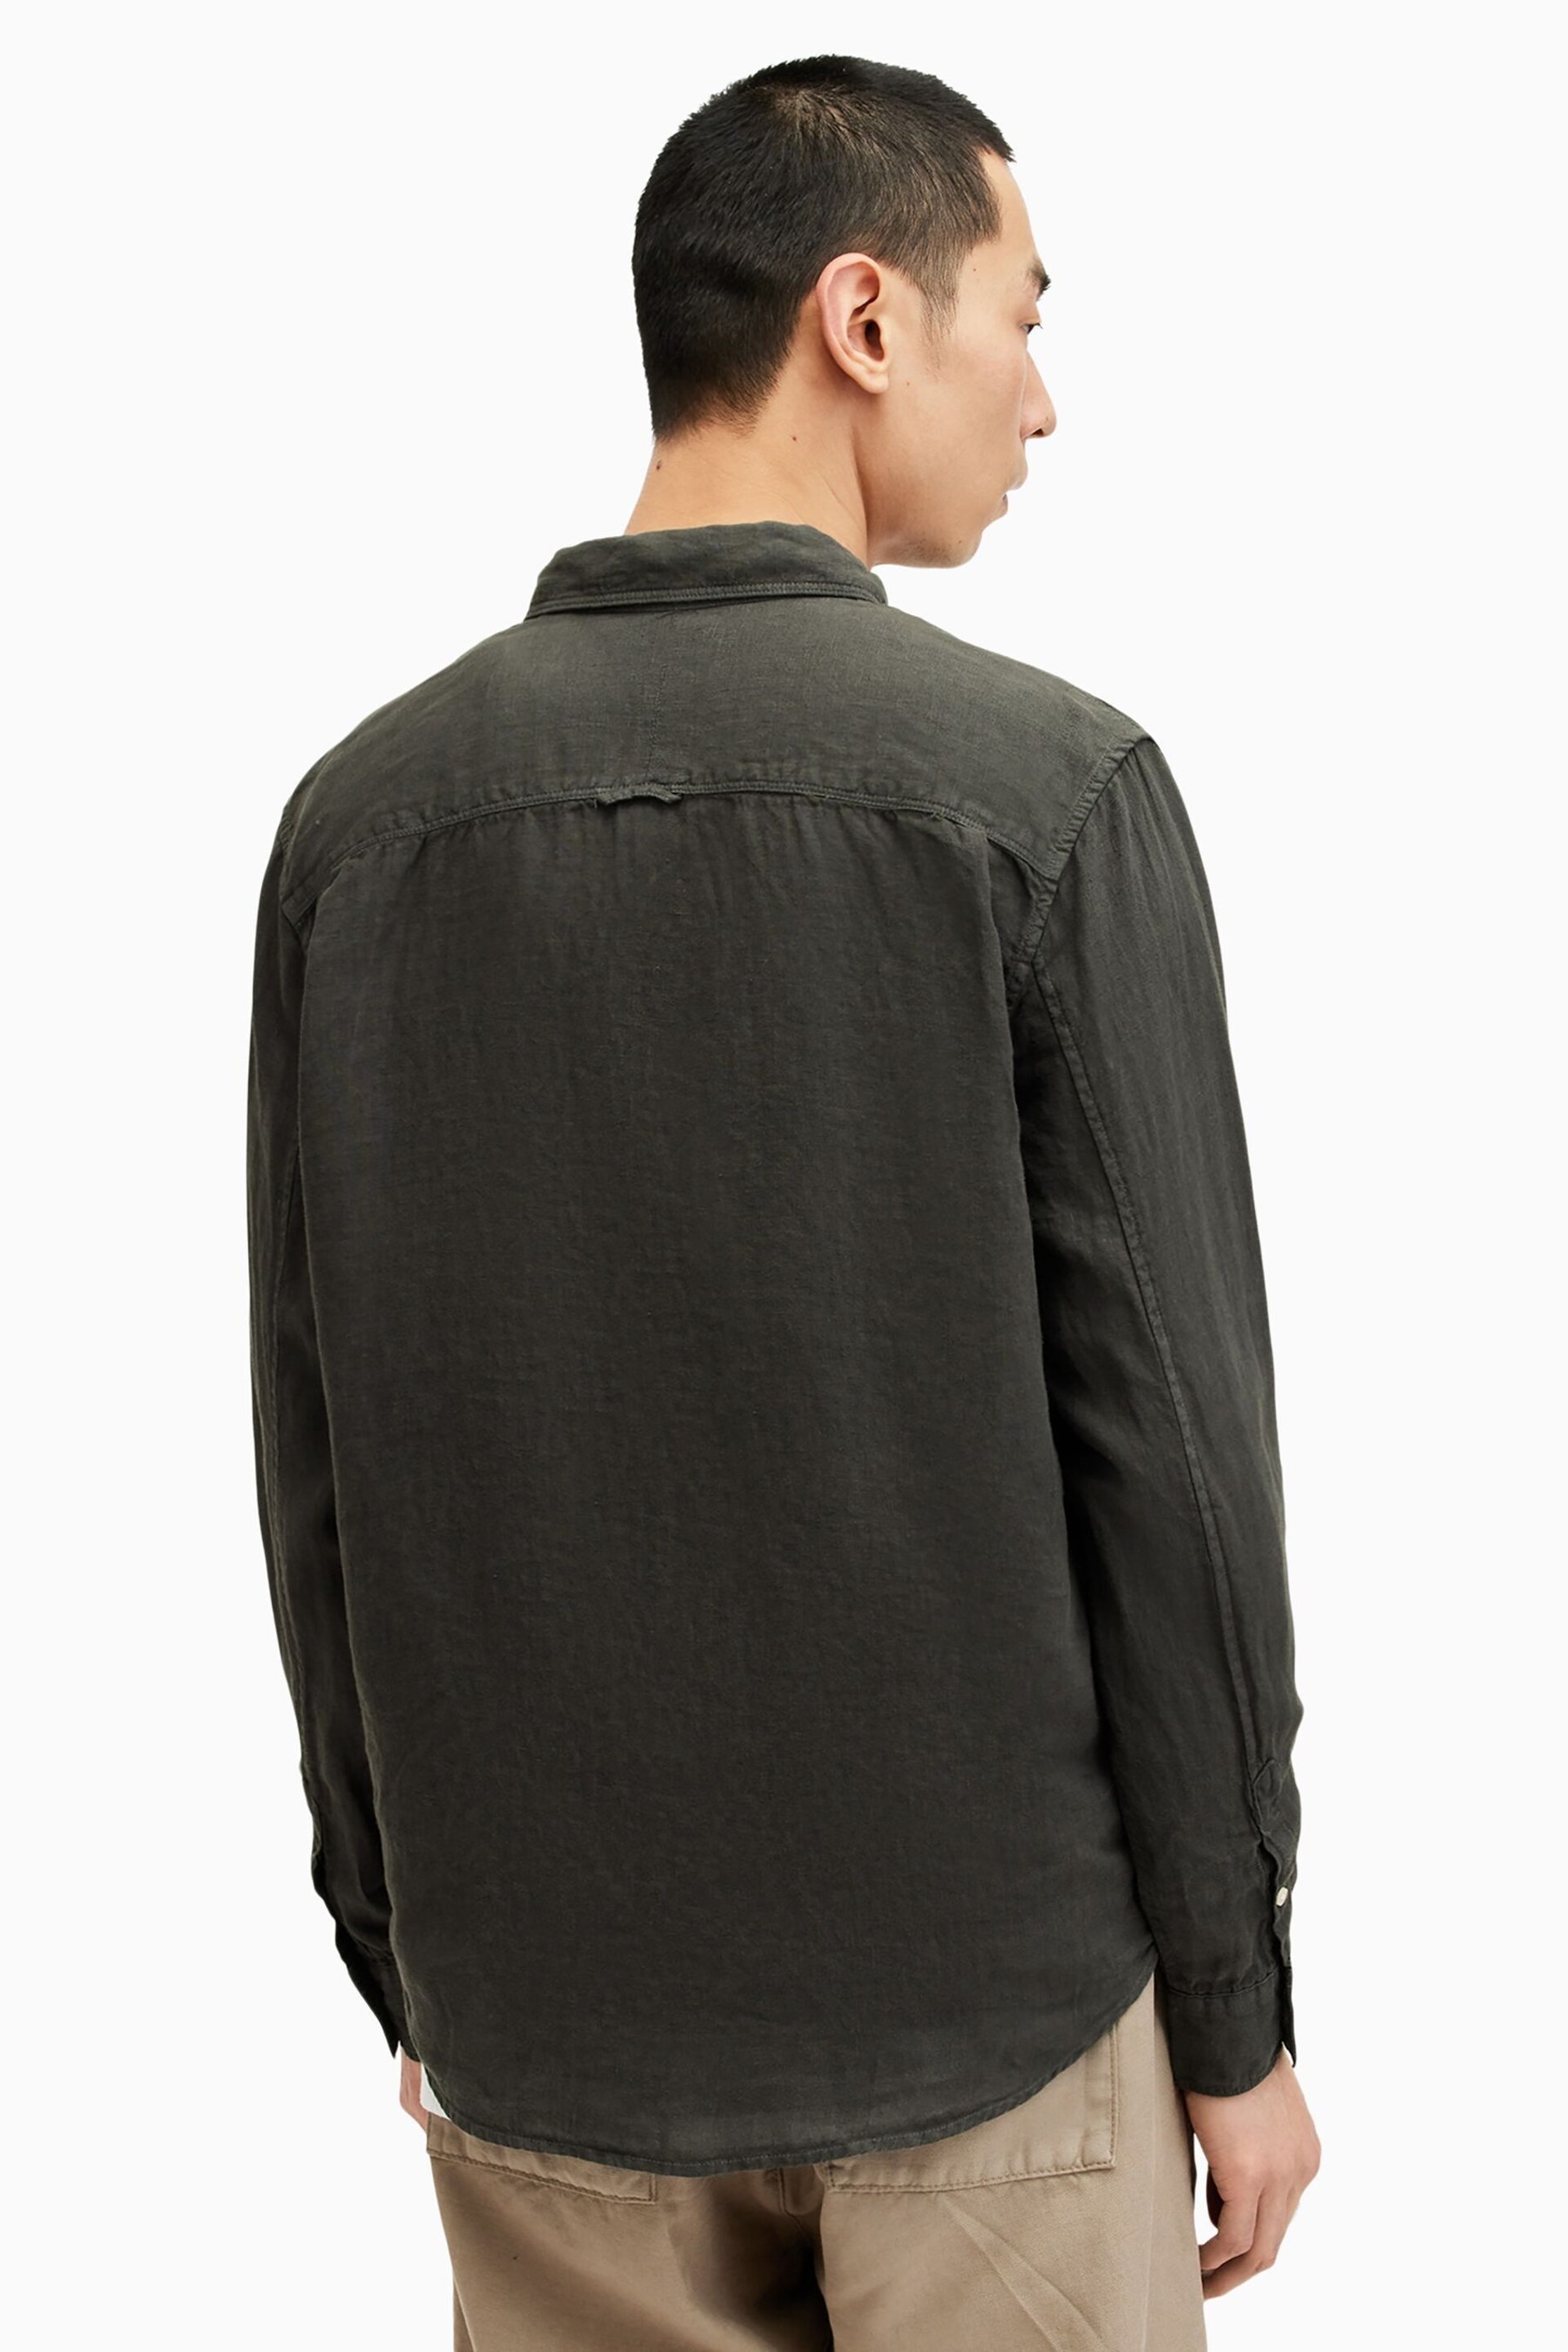 AllSaints Black Cypress Shirt - Image 4 of 7